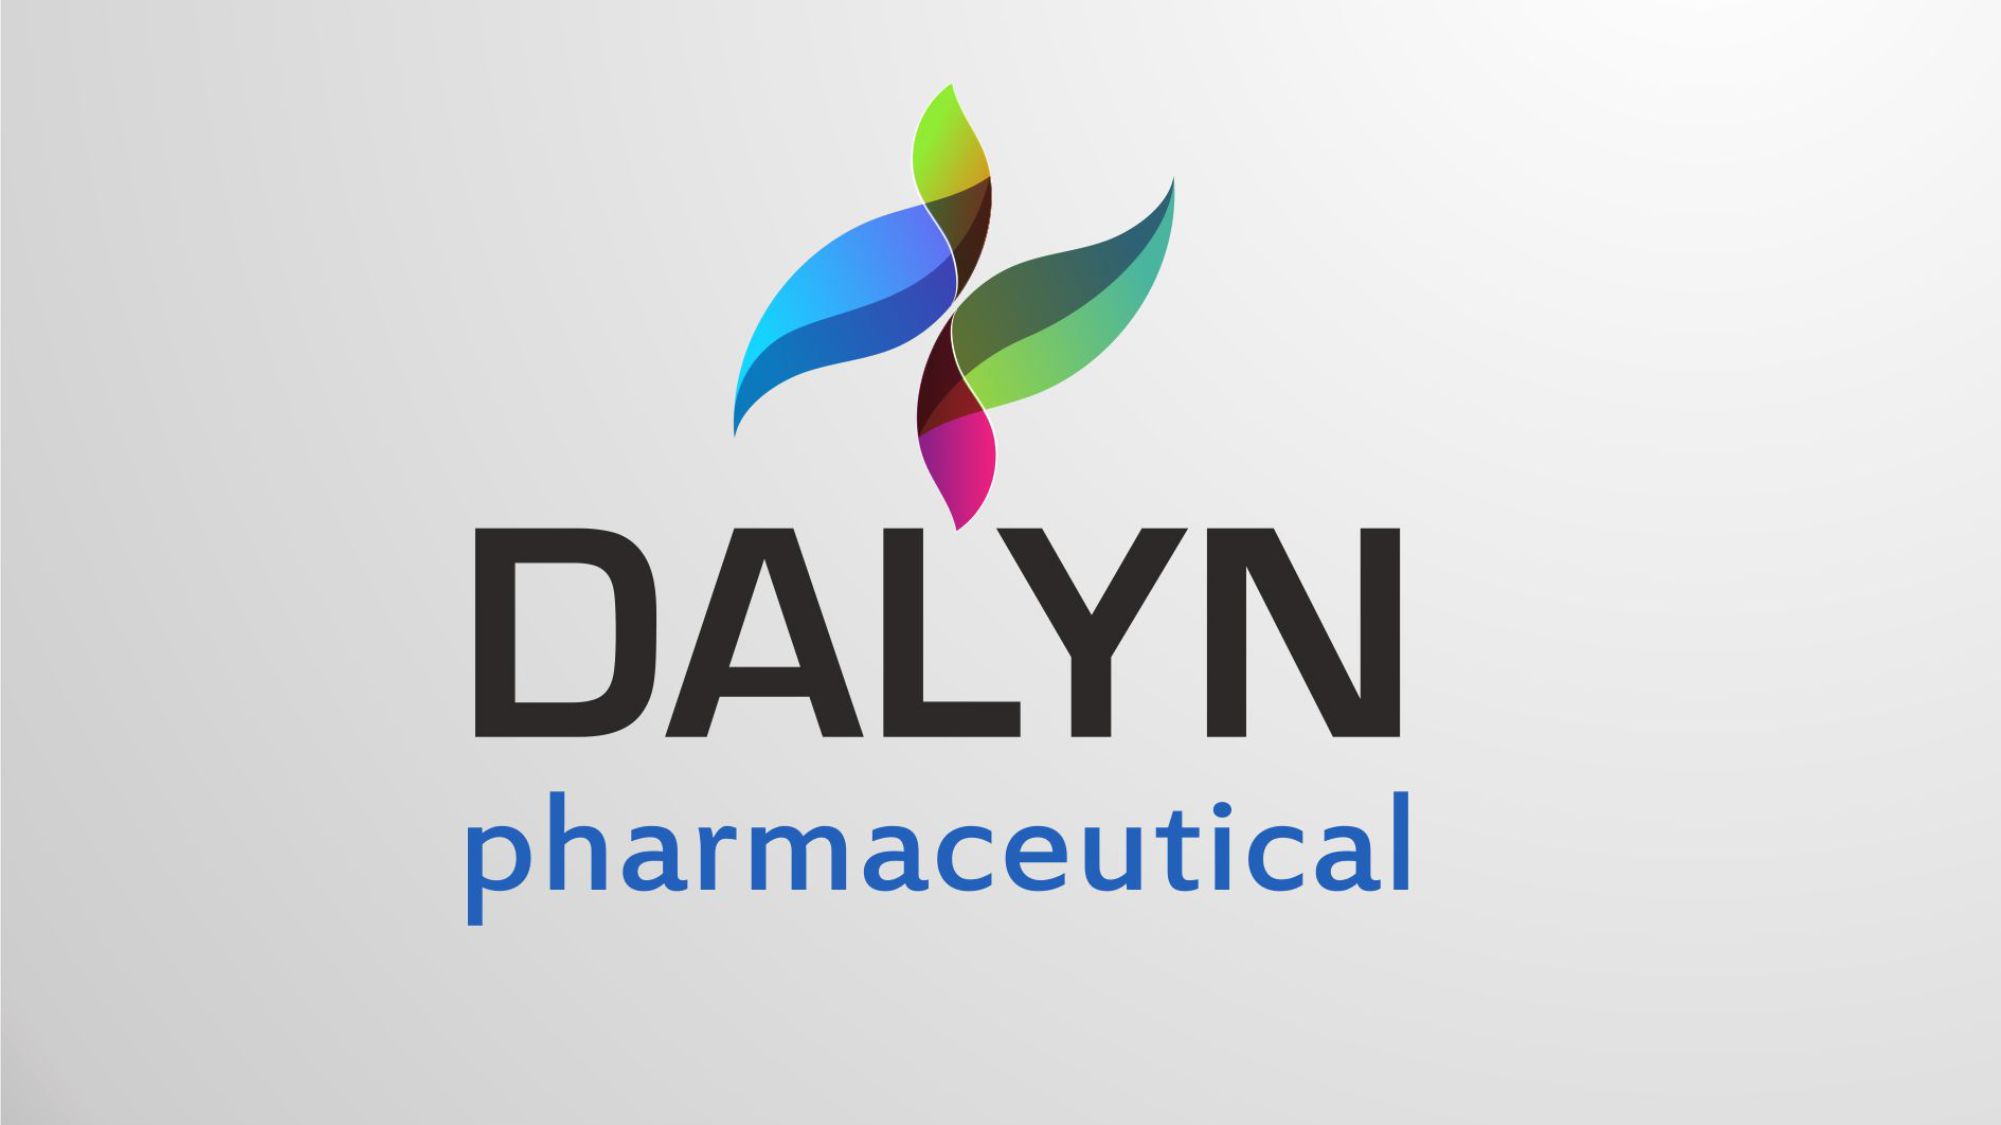 Dalyn Pharmaceutical Ltd skincol.com